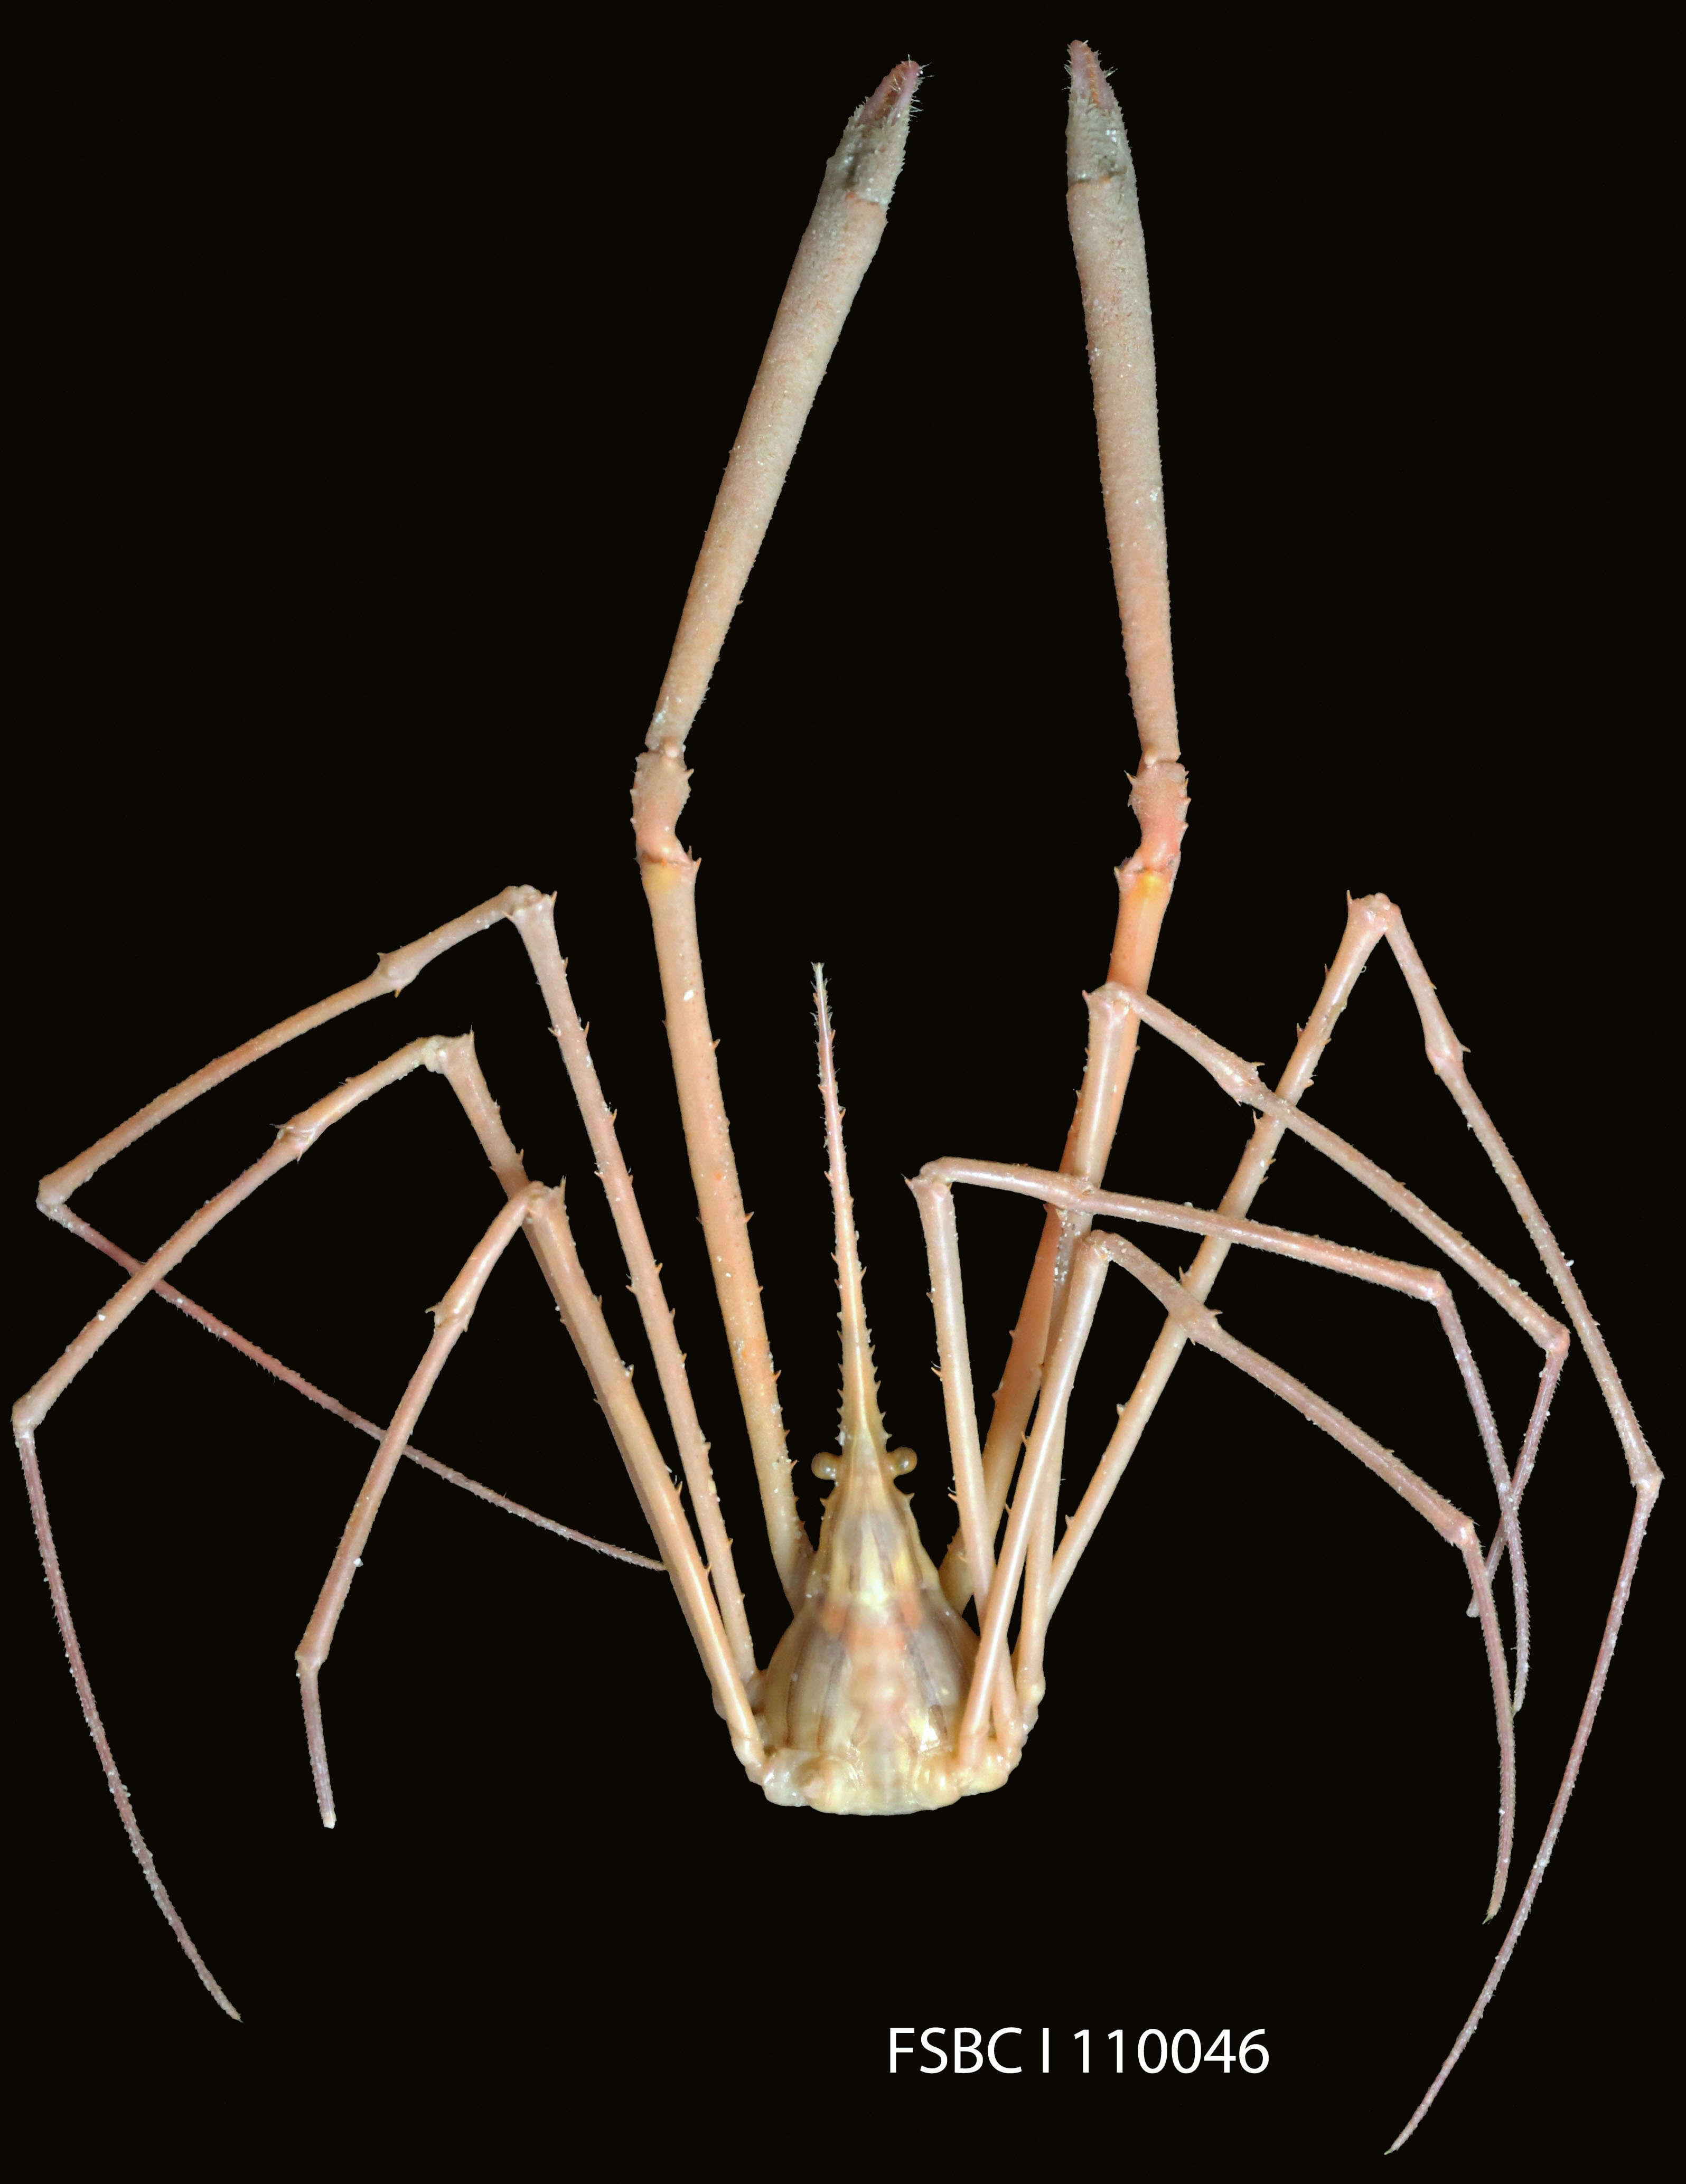 Image of Yellowline Arrow Crab